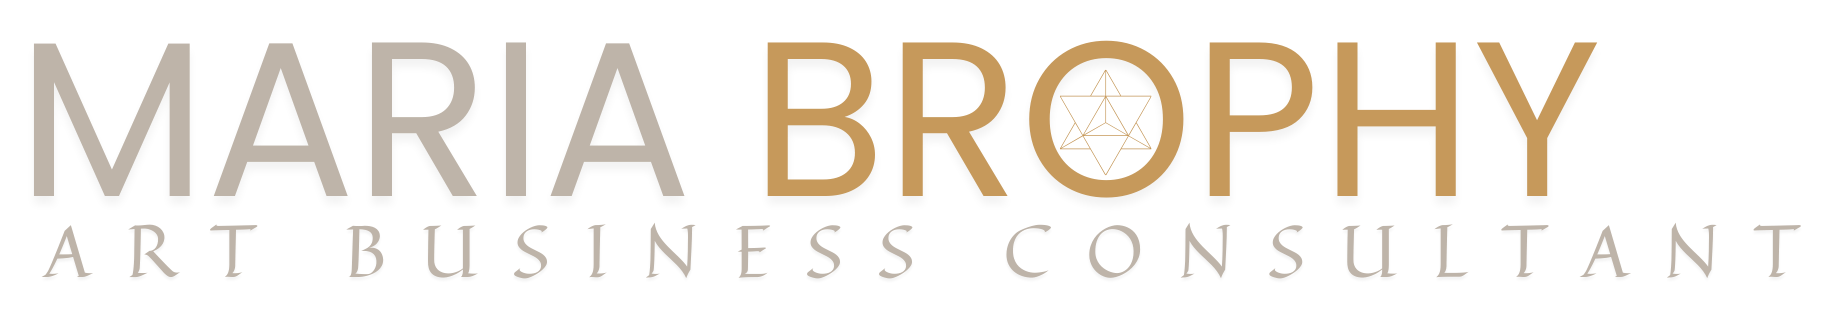 Maria Brophy Art Business Consultant logo